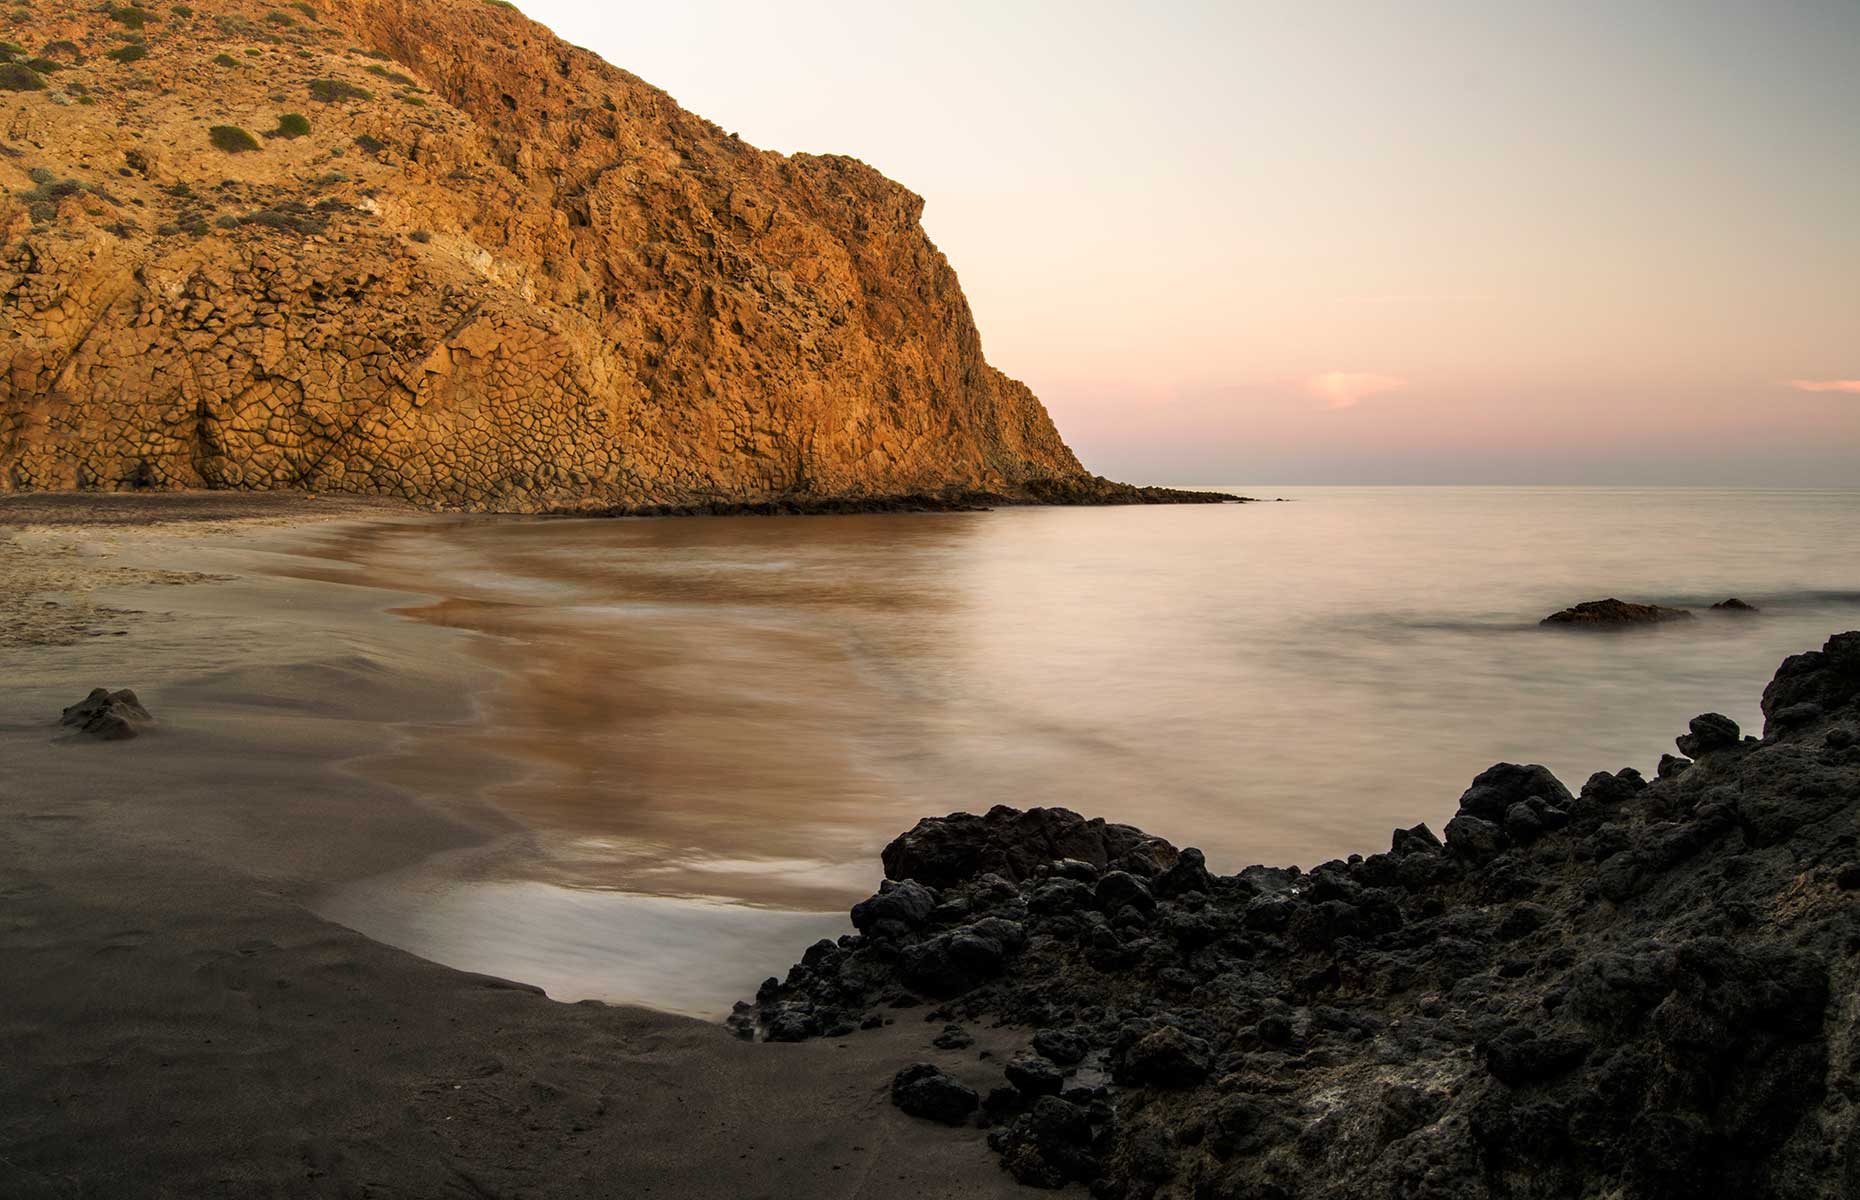 Cabo de Gata-Níjar Natural Park (Image: Josema Gomez/Shutterstock)